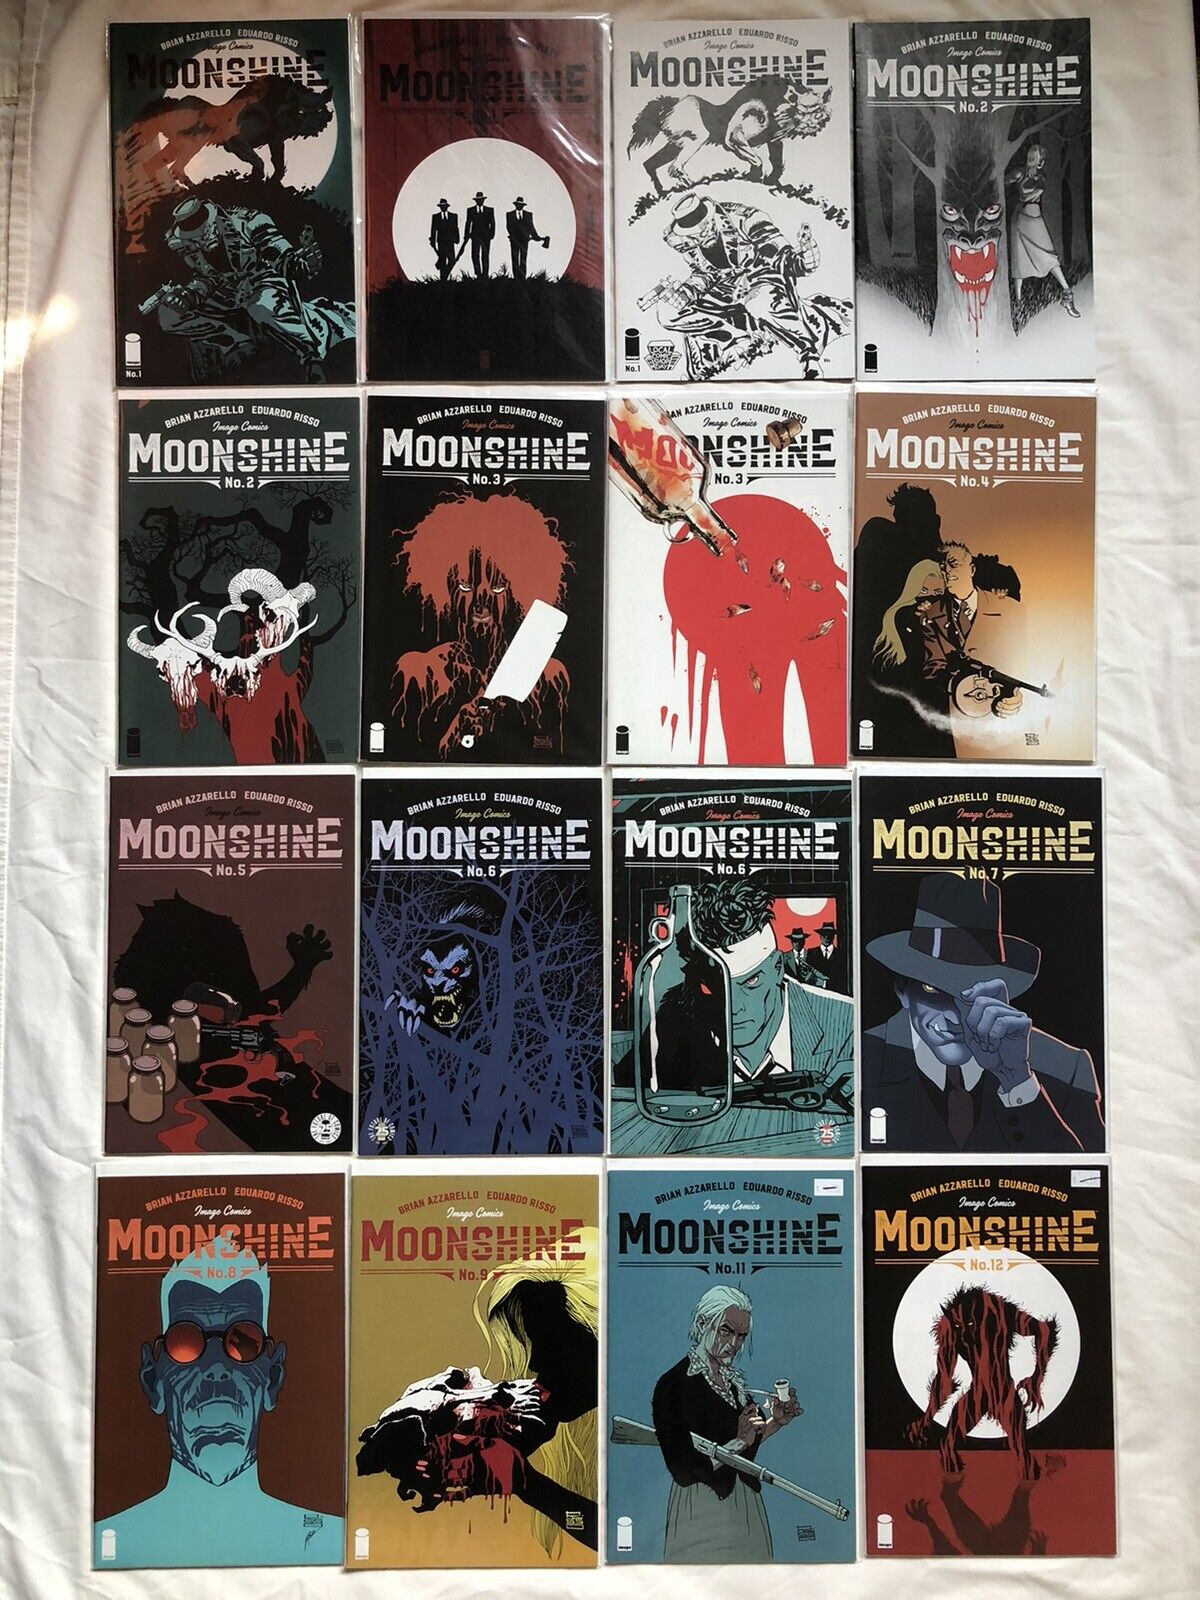 MOONSHINE #1 - #9, 10, 11, 12, 13 (w/ Variants) - TWENTY-TWO (22) ISSUE LOT